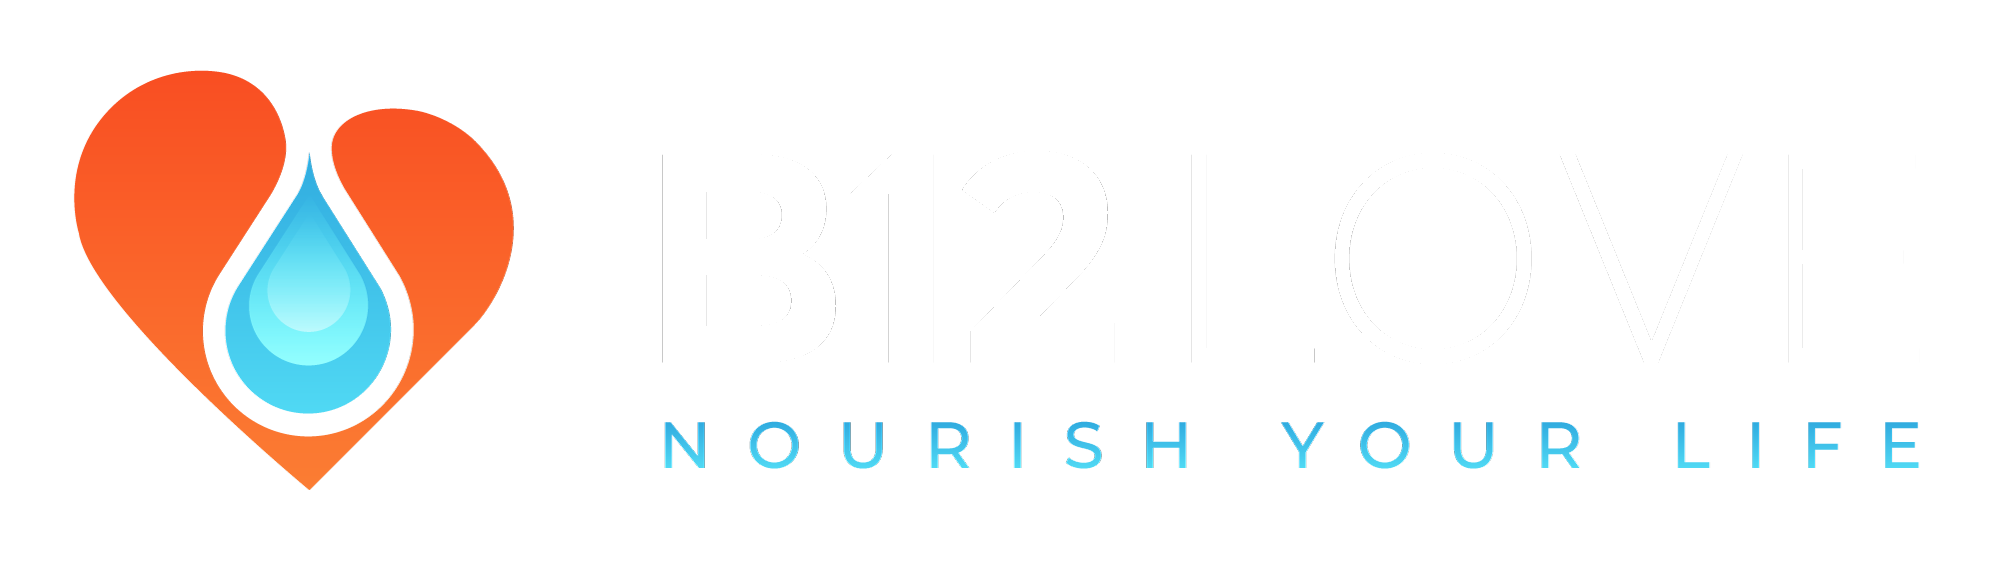 B12 LOVE. Nourish Your Life